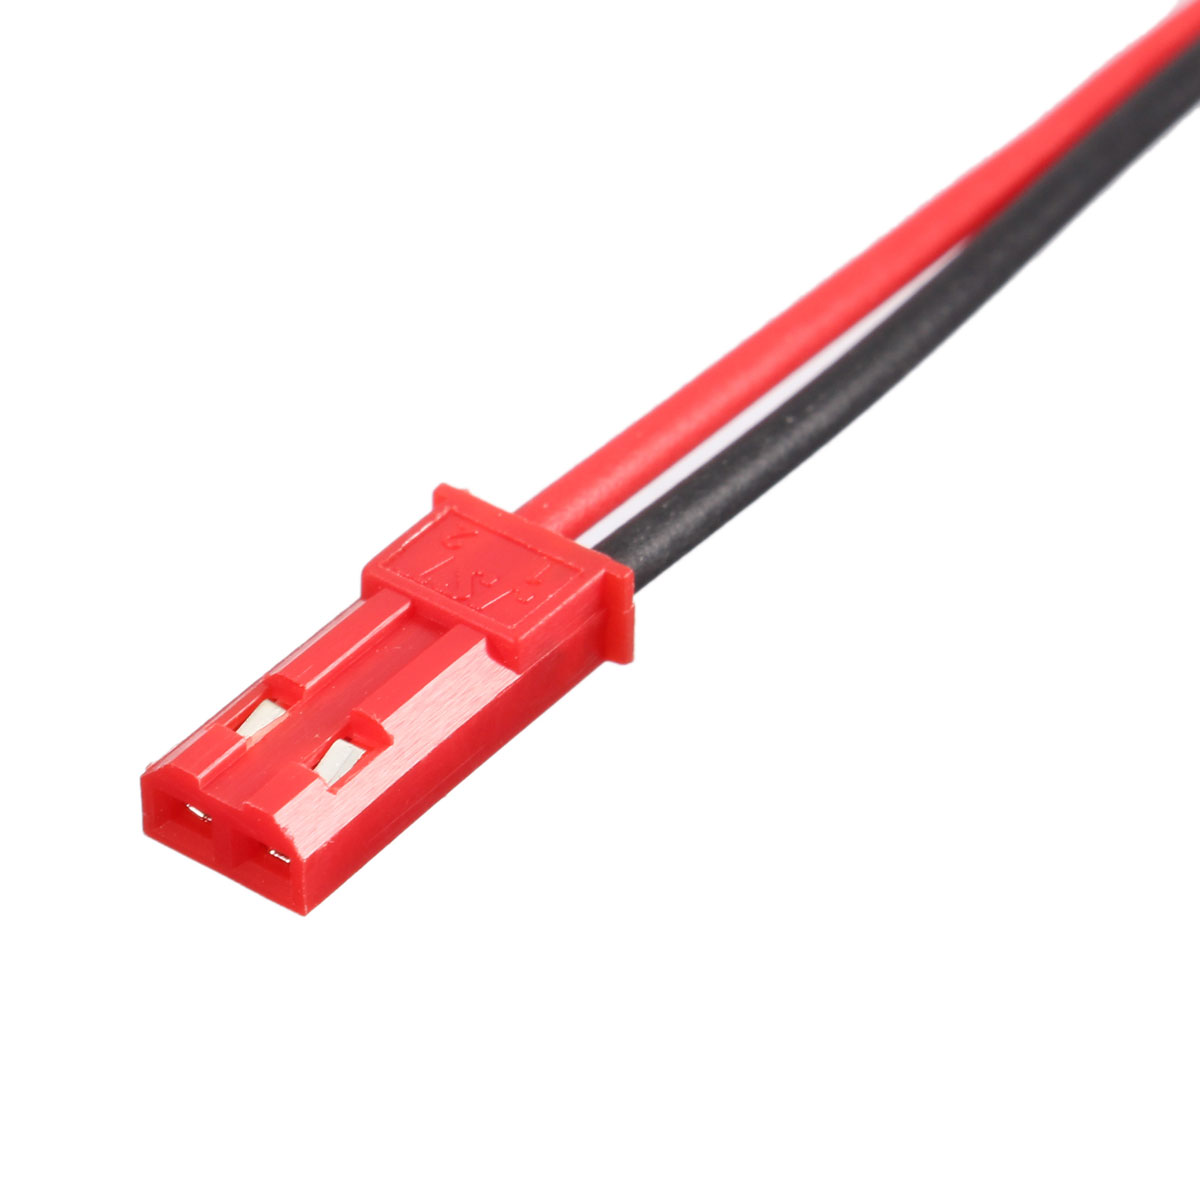 Male JST Connector Plug Cables